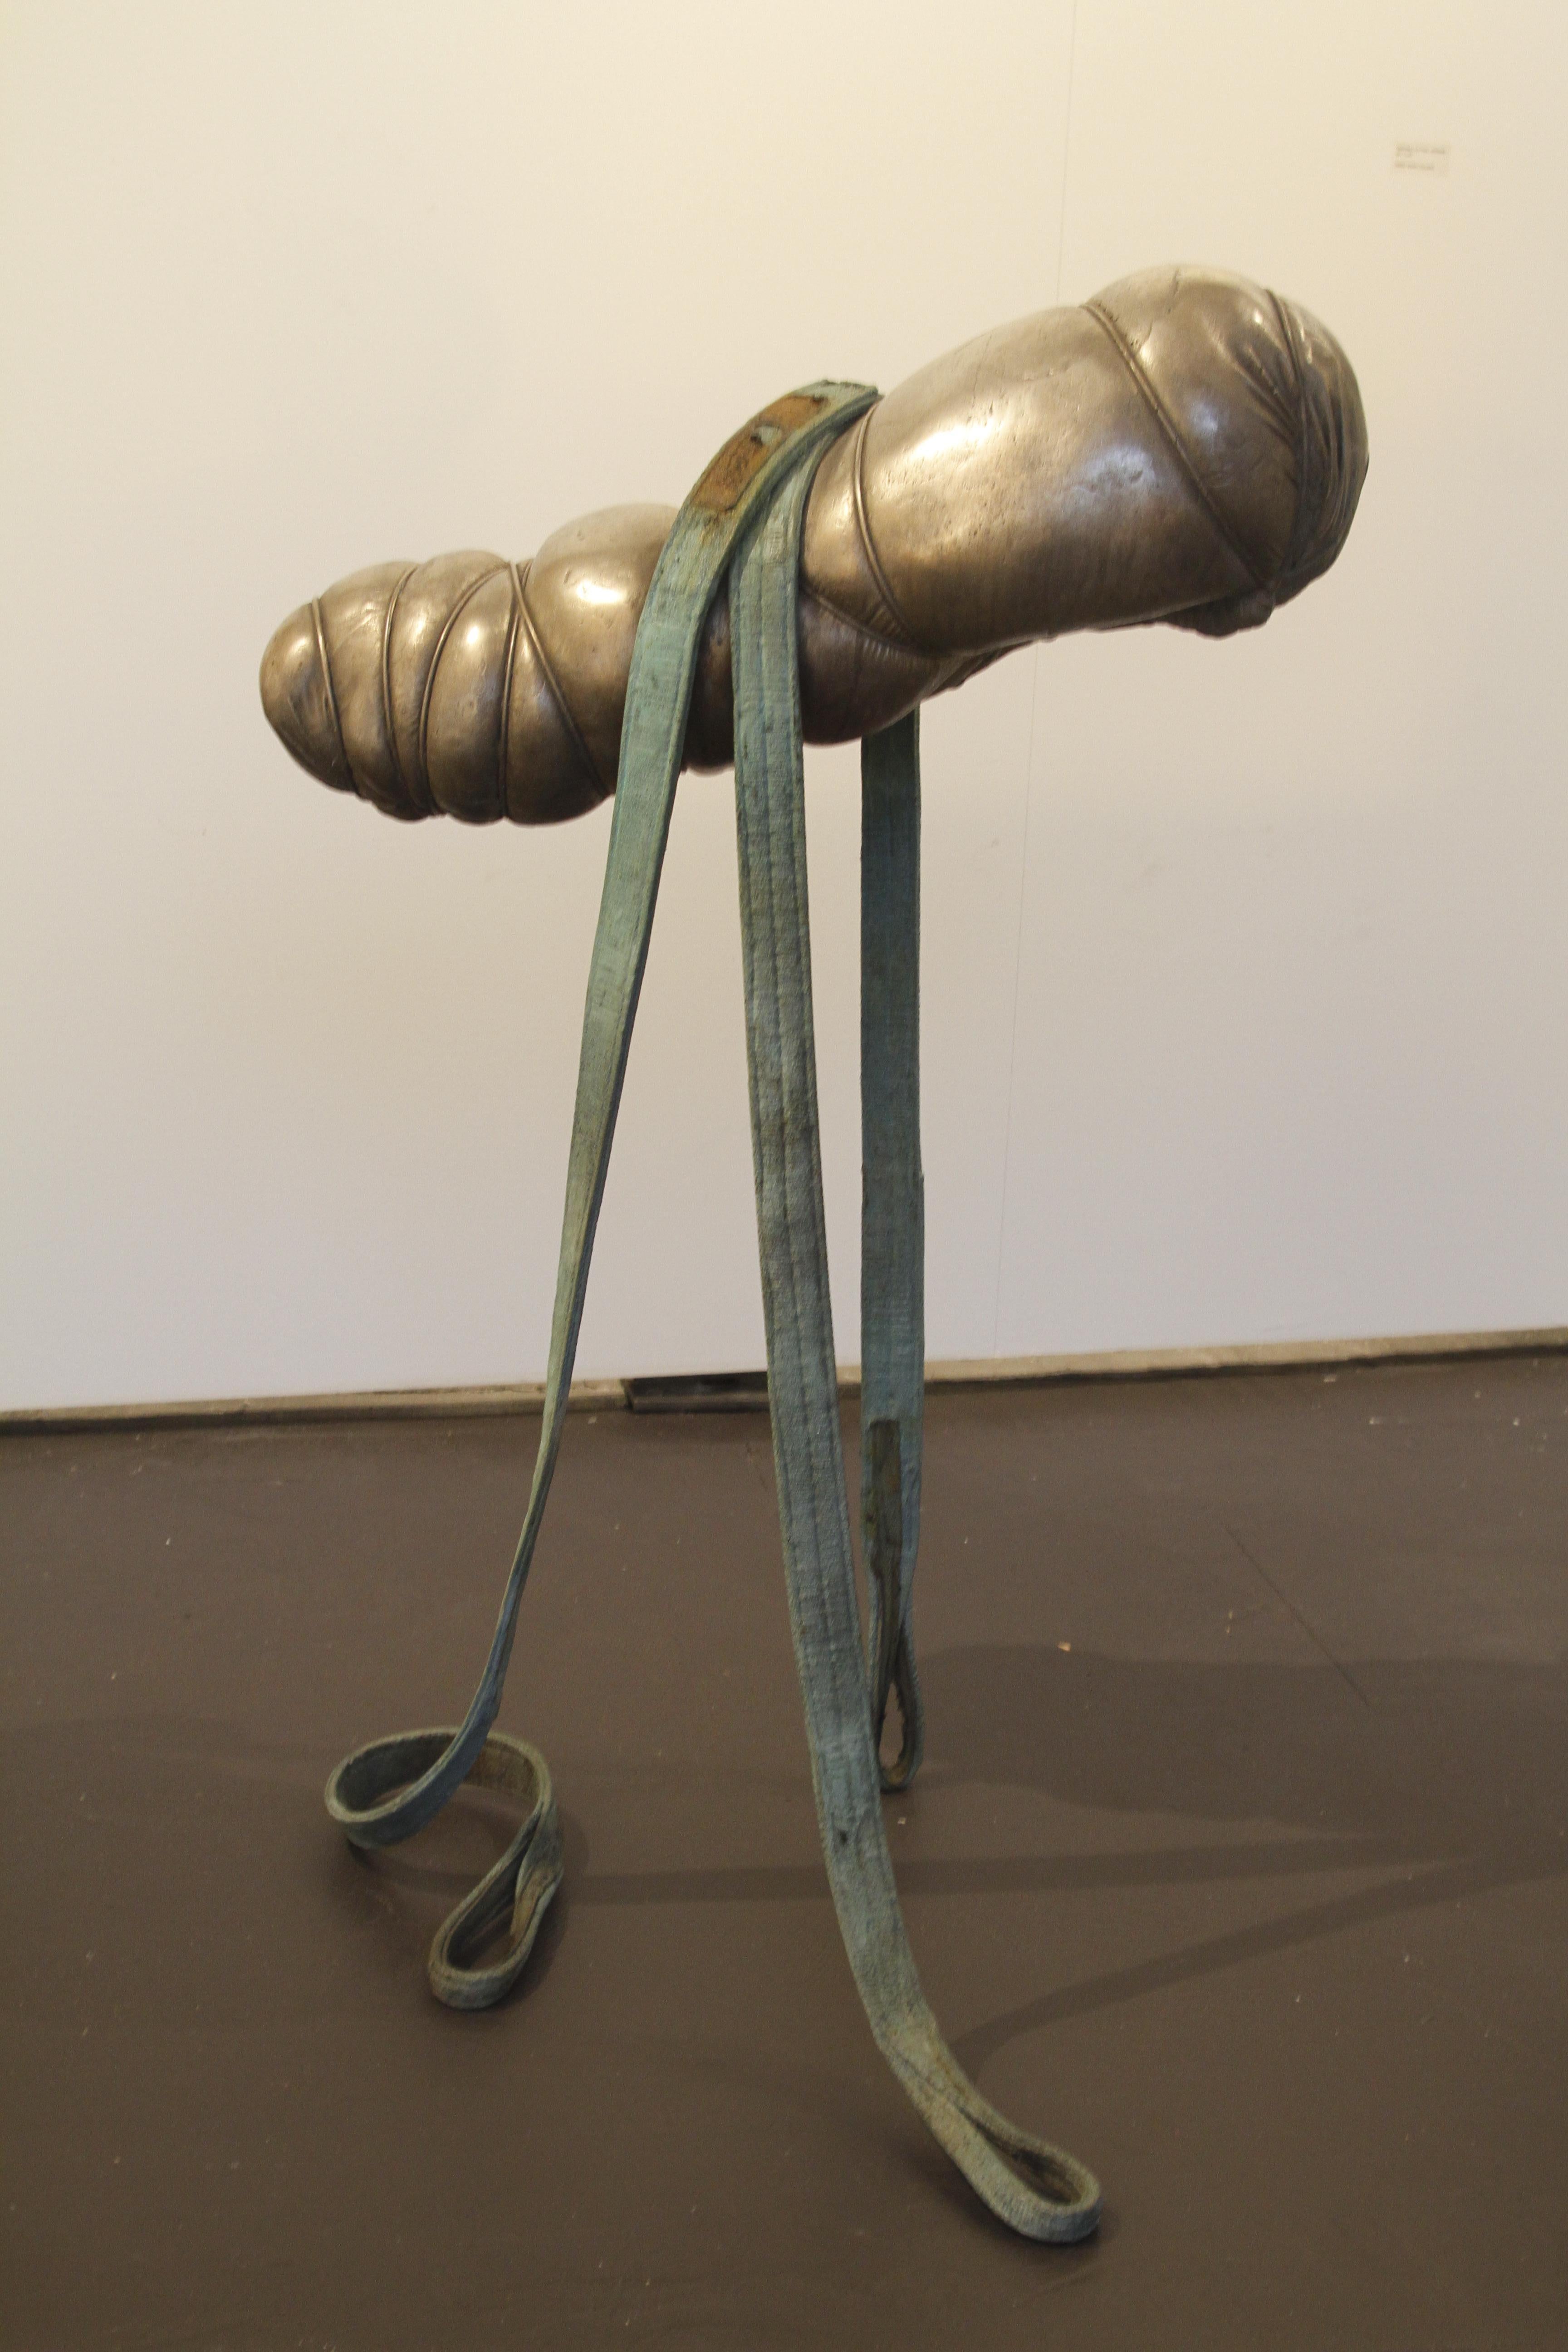 Heirloom - Sculpture by David Middlebrook